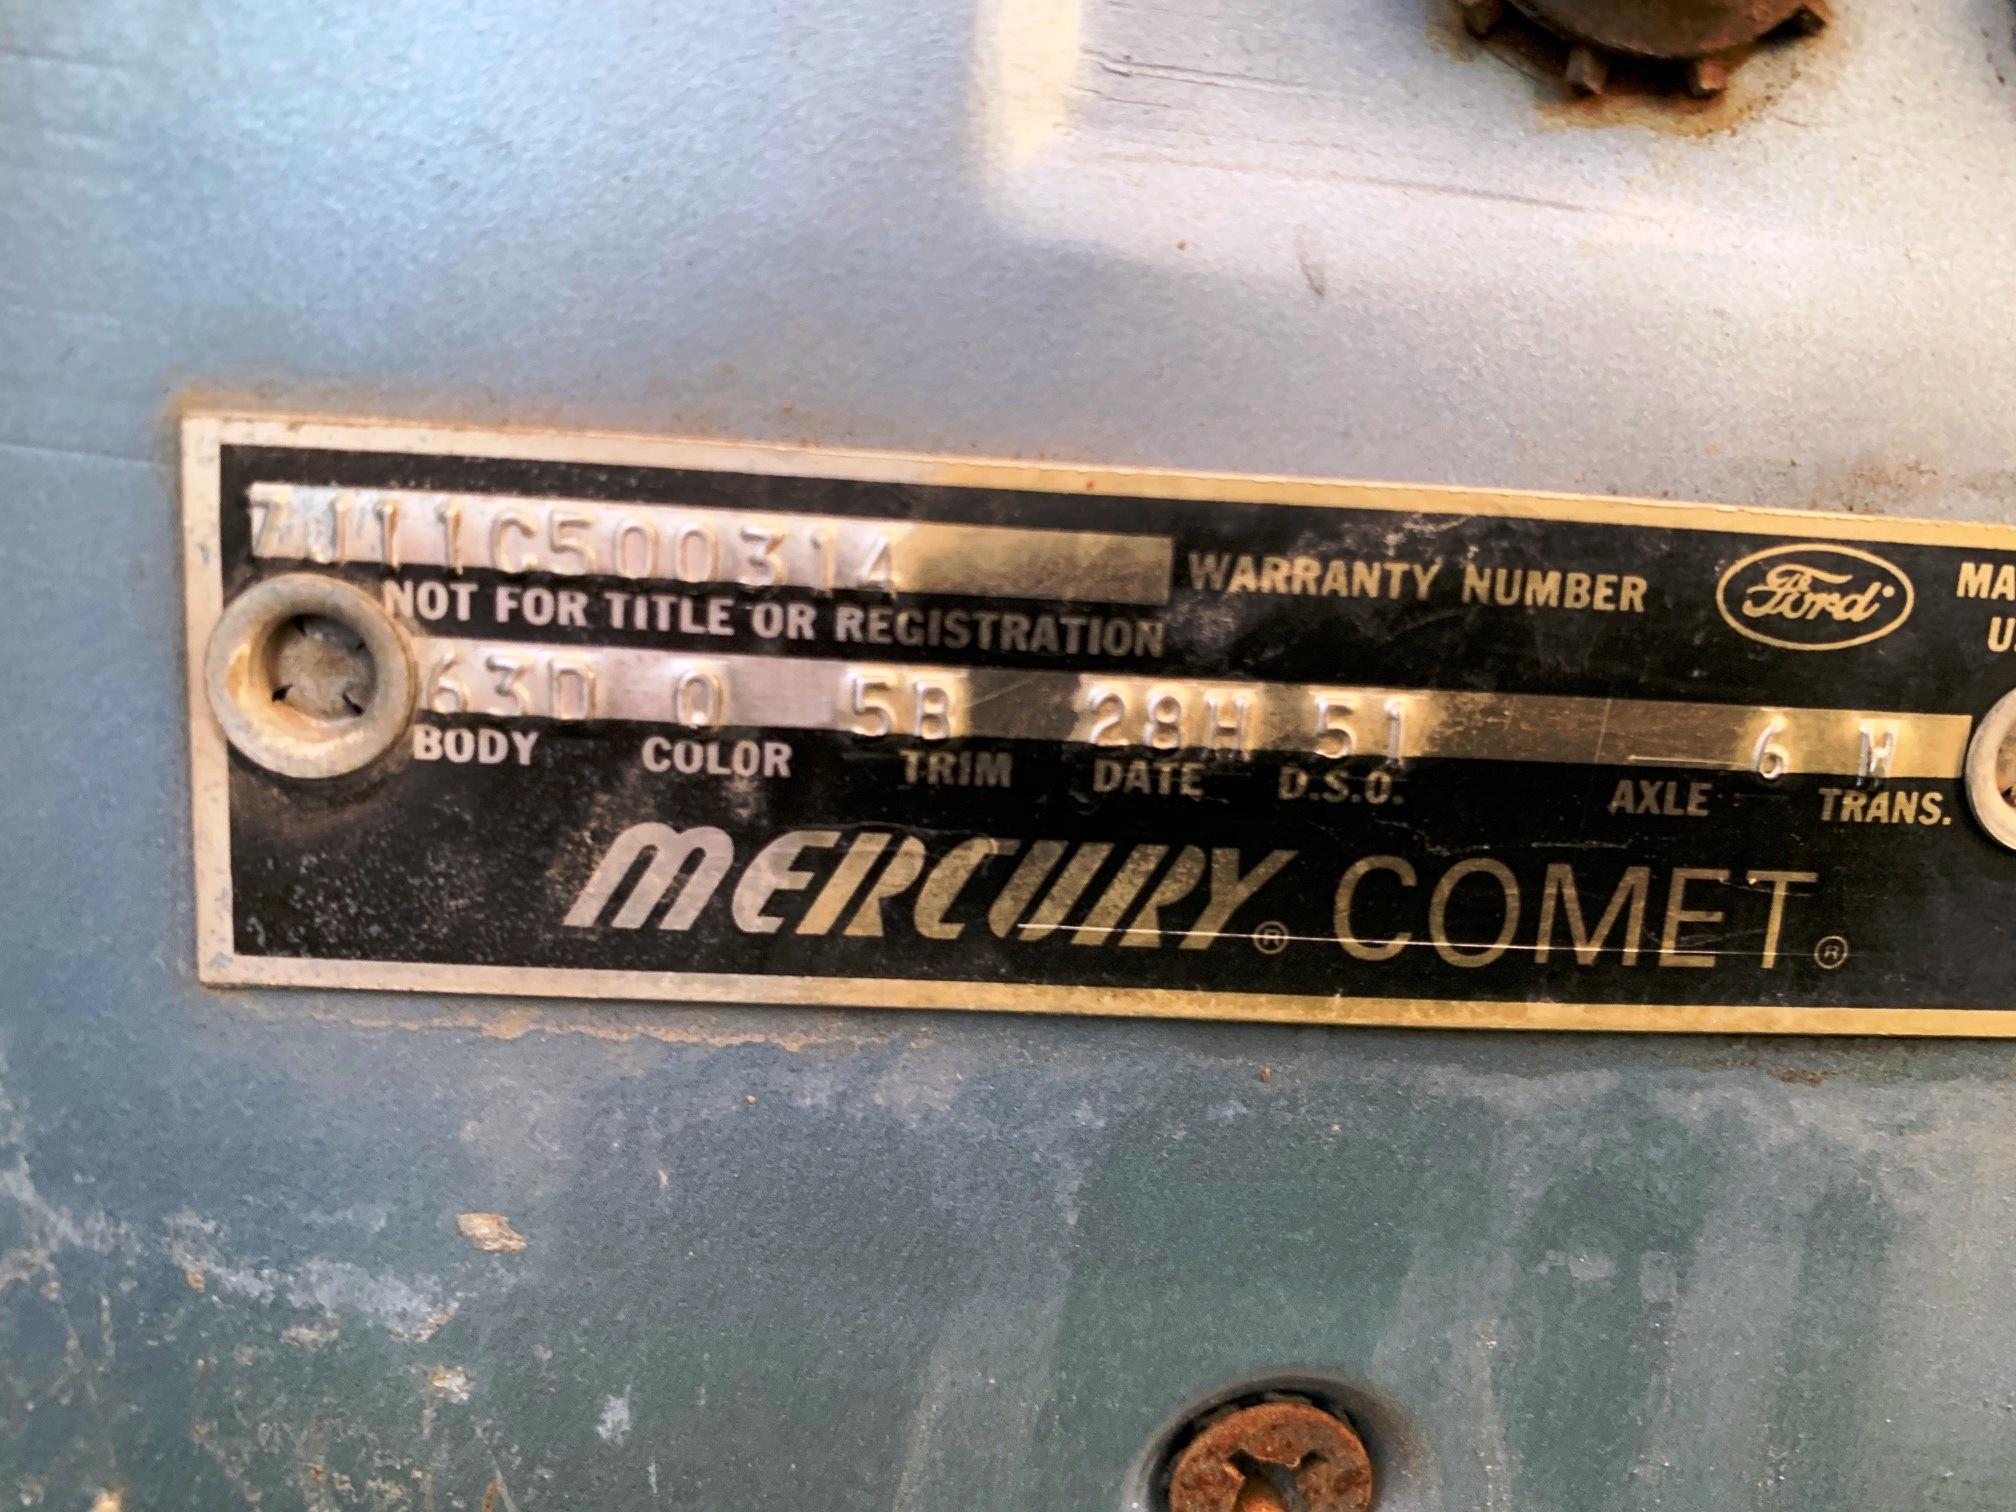 1967 Mercury Comet Caliente 2-Door Hardtop, VIN# 7J11C500314, 289 ci Engine, Automatic Transmission,